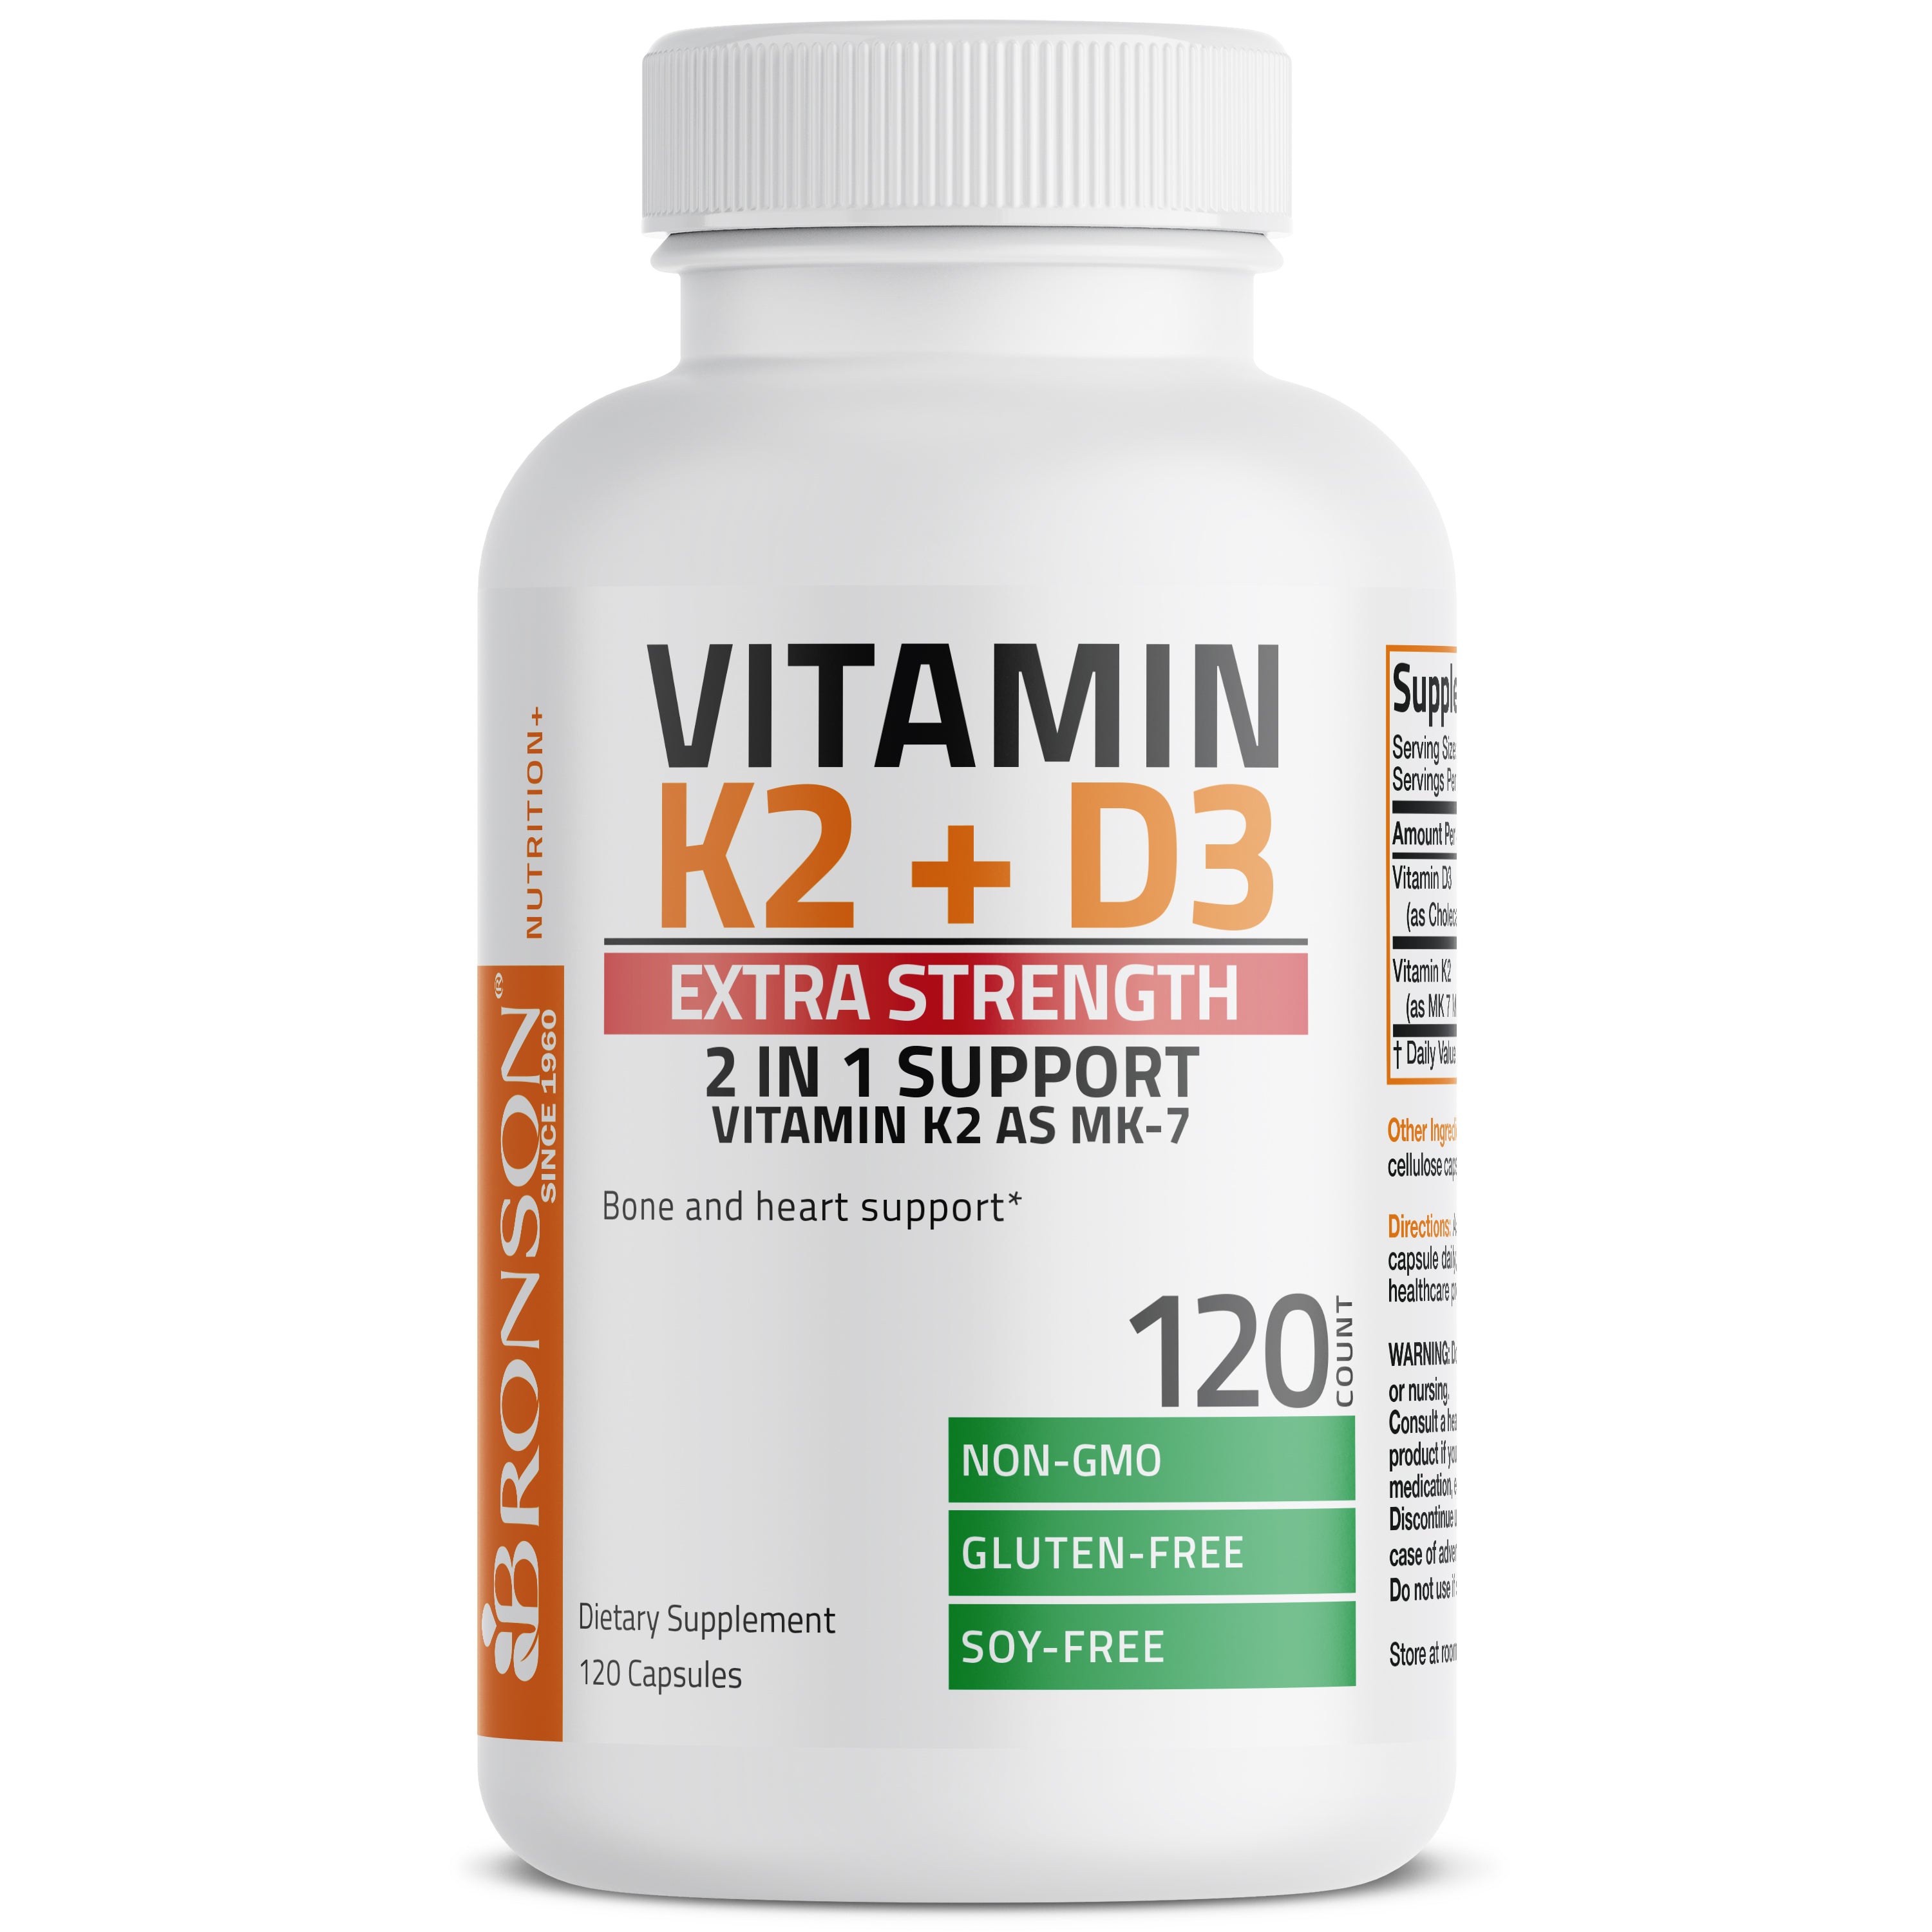 Vitamin K2 MK-7 Plus Vitamin D3 Extra Strength view 9 of 12